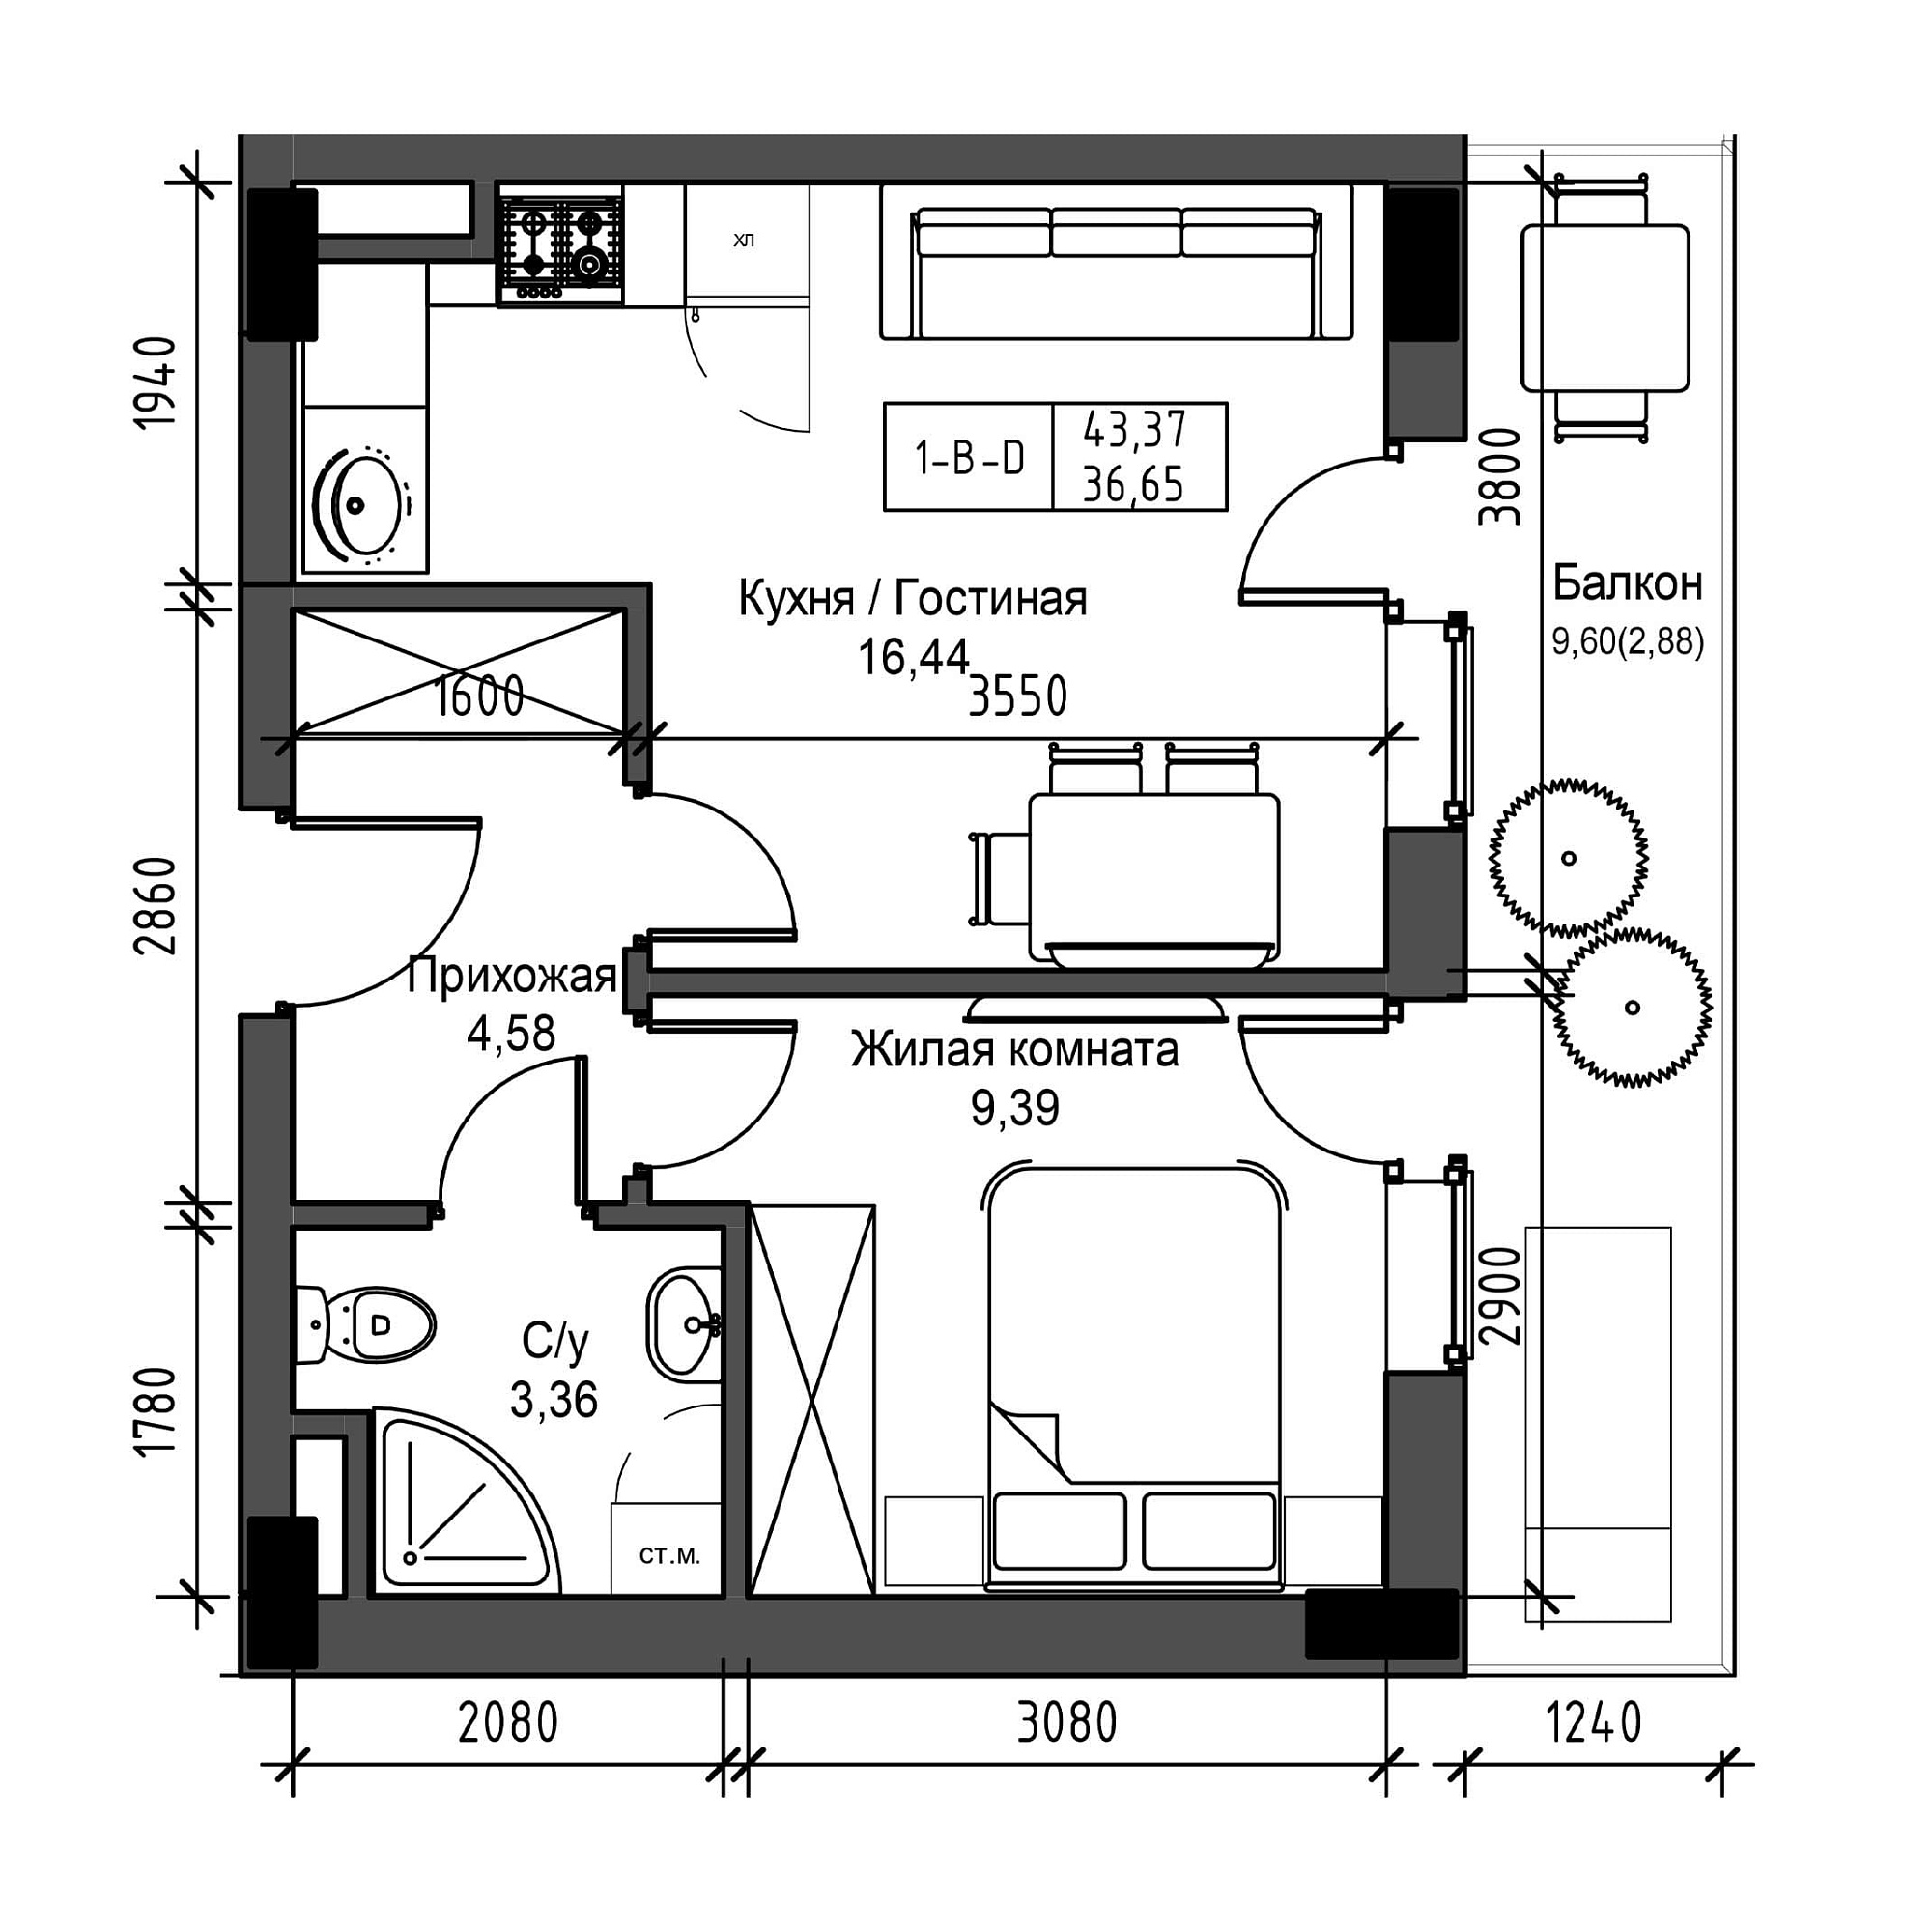 Planning 1-rm flats area 36.65m2, UM-001-07/0002.